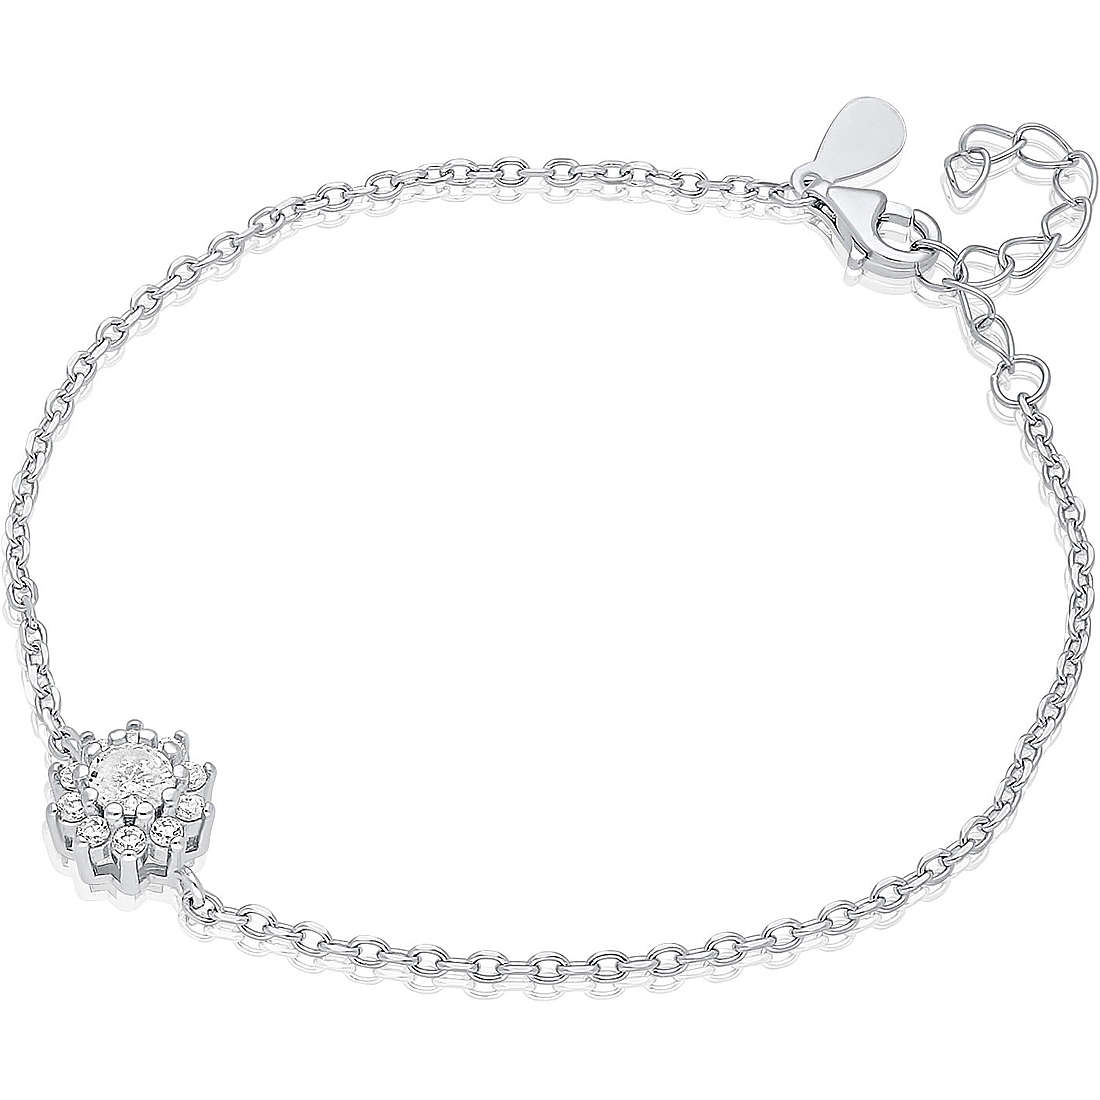 bracelet woman Chain 925 Silver jewel GioiaPura INS028BR342RHWH